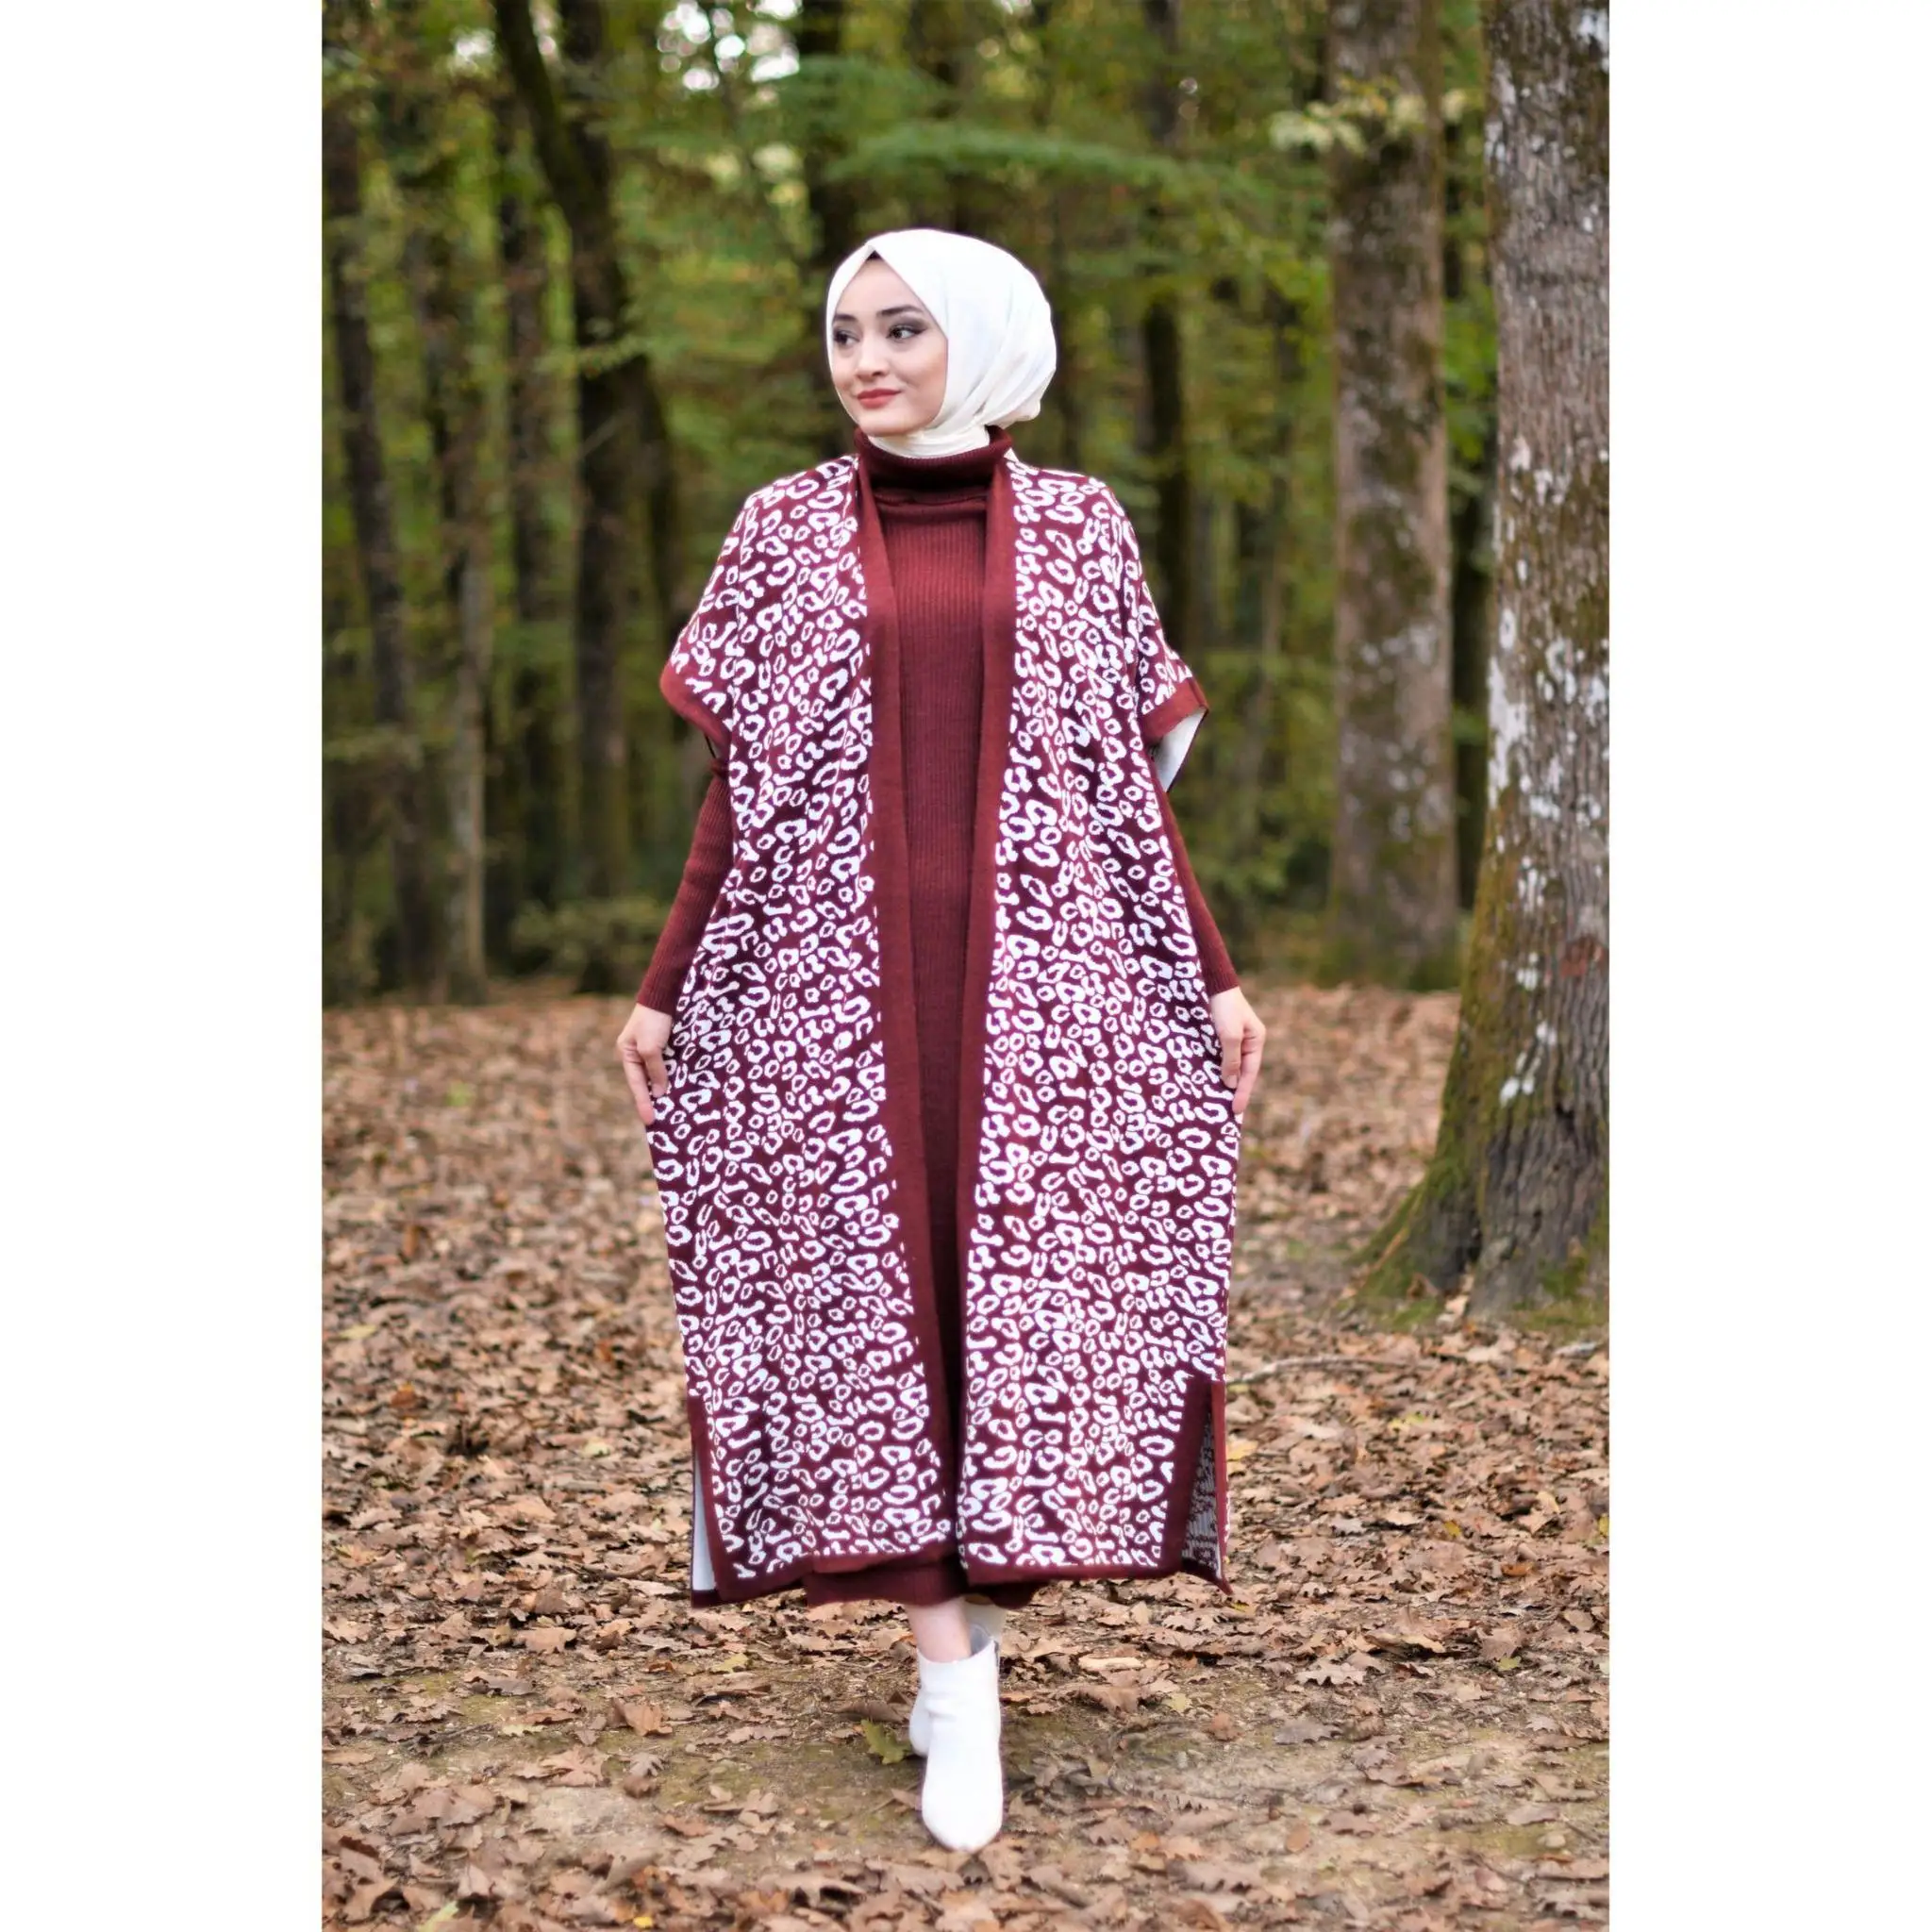 Cotton Knitted Set Dress and Cardigan Winter Women Fashion Elastic Waist Free Size Relax Big Plus Sized Muslim Modest Long Wear